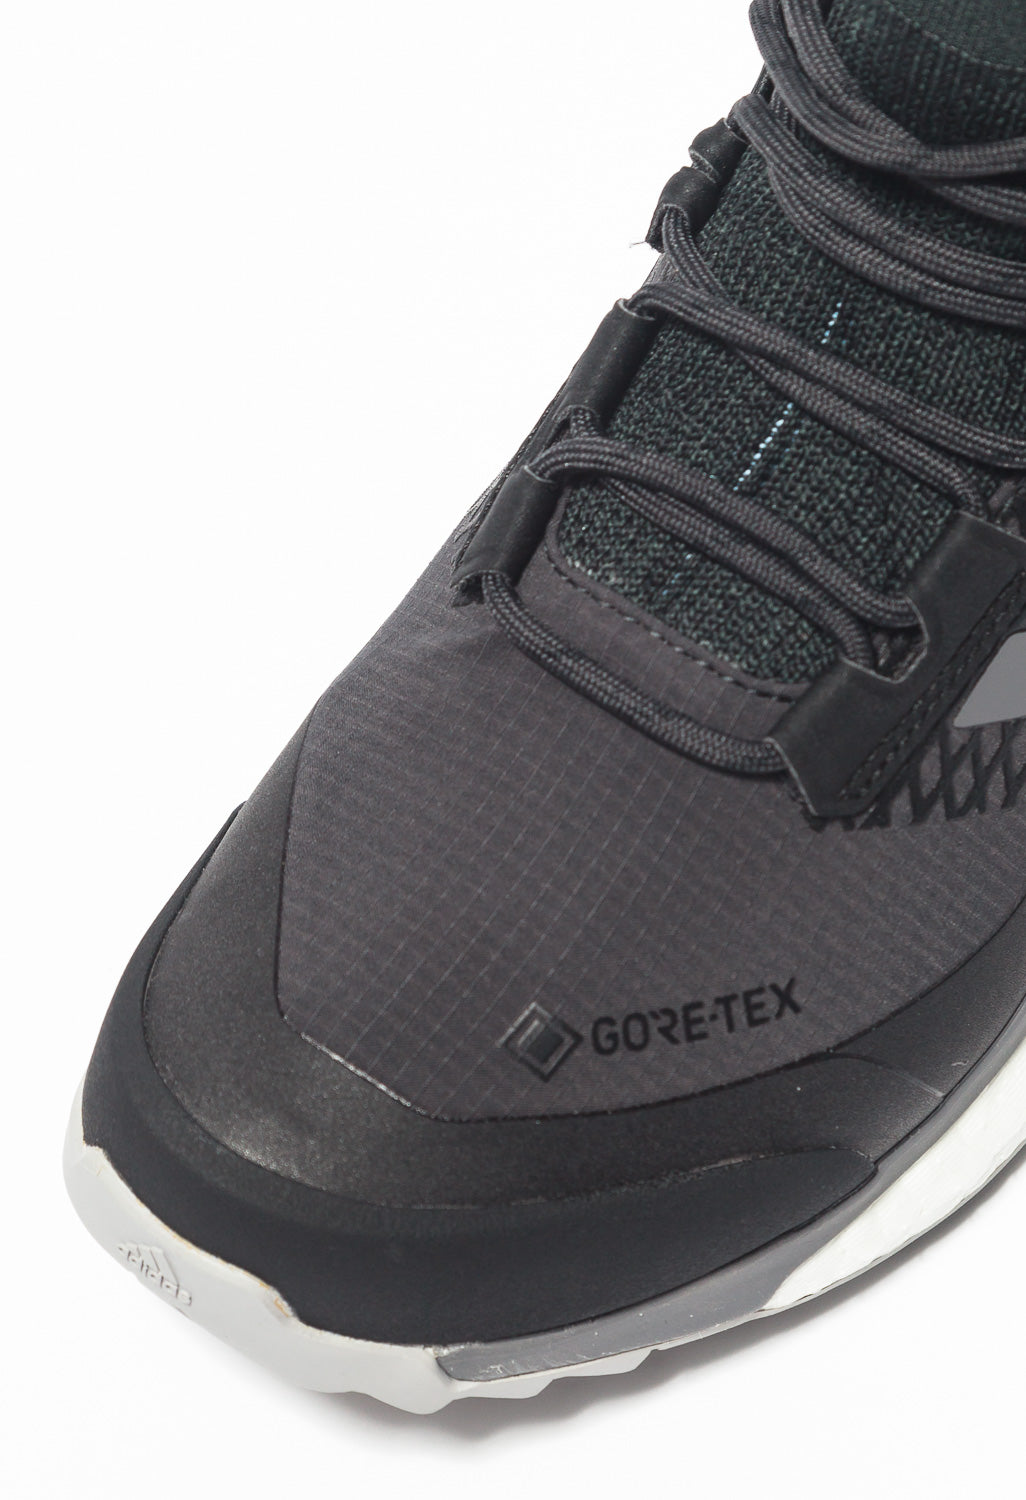 adidas Terrex Free Hiker GORE-TEX Women's Boots - Carbon/Grey Four/Glow Blue